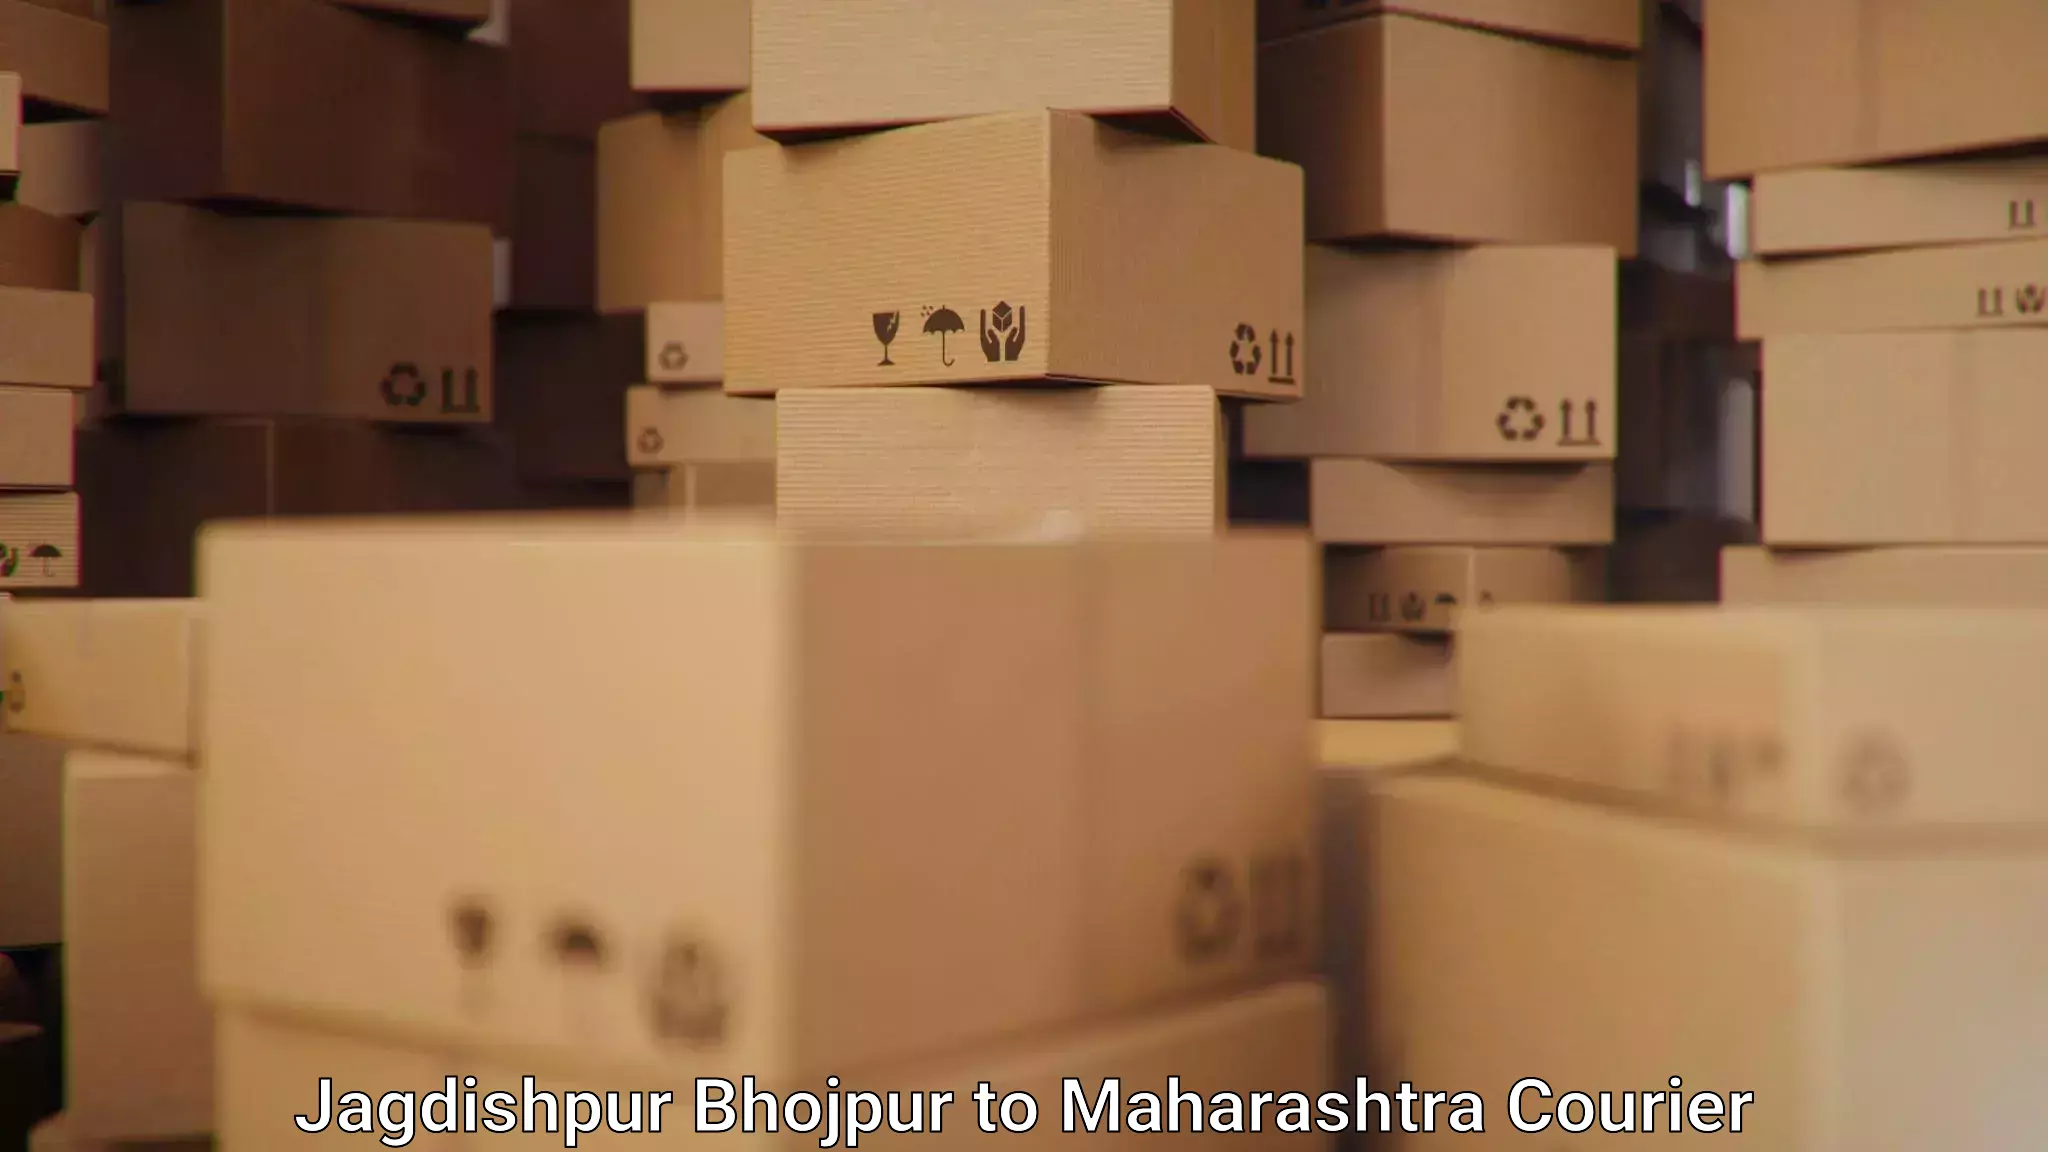 Supply chain efficiency in Jagdishpur Bhojpur to Kolhapur